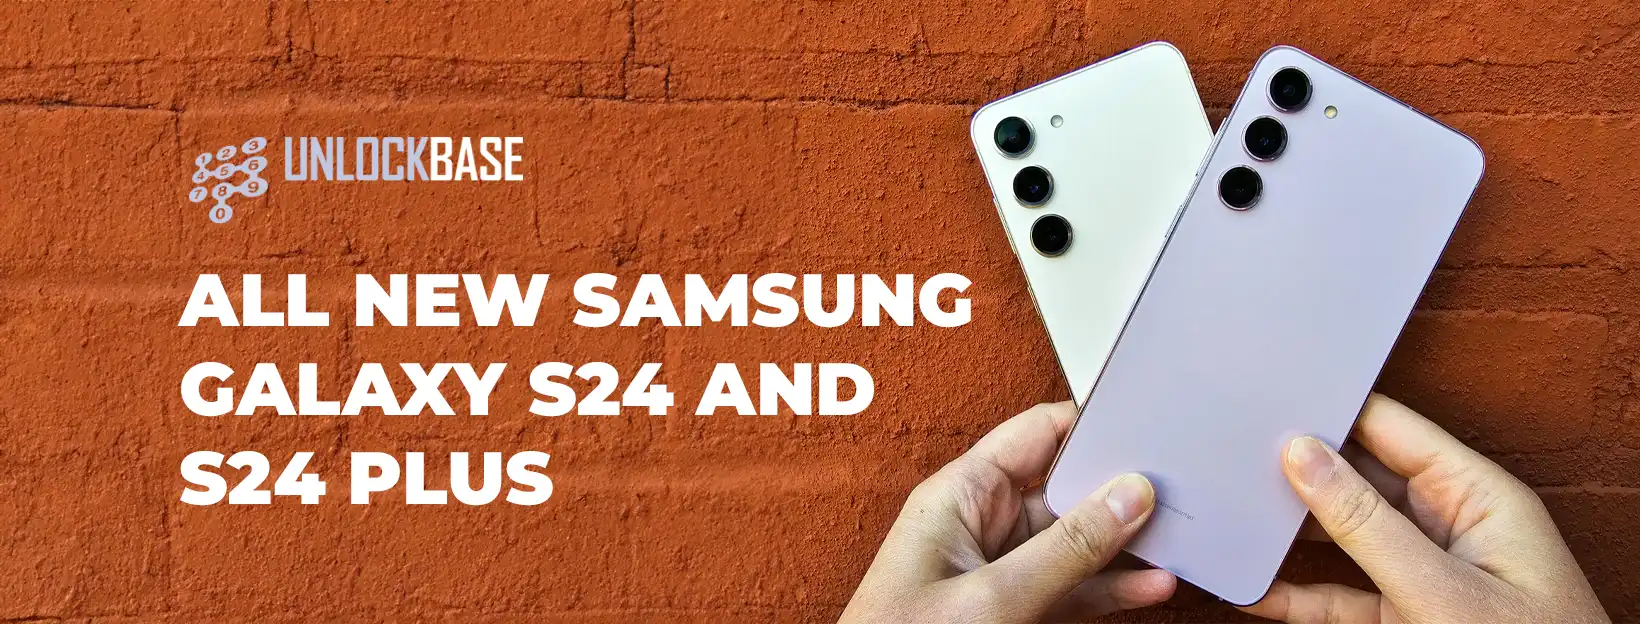 All New Samsung Galaxy S24 and S24 Plus - UnlockBase